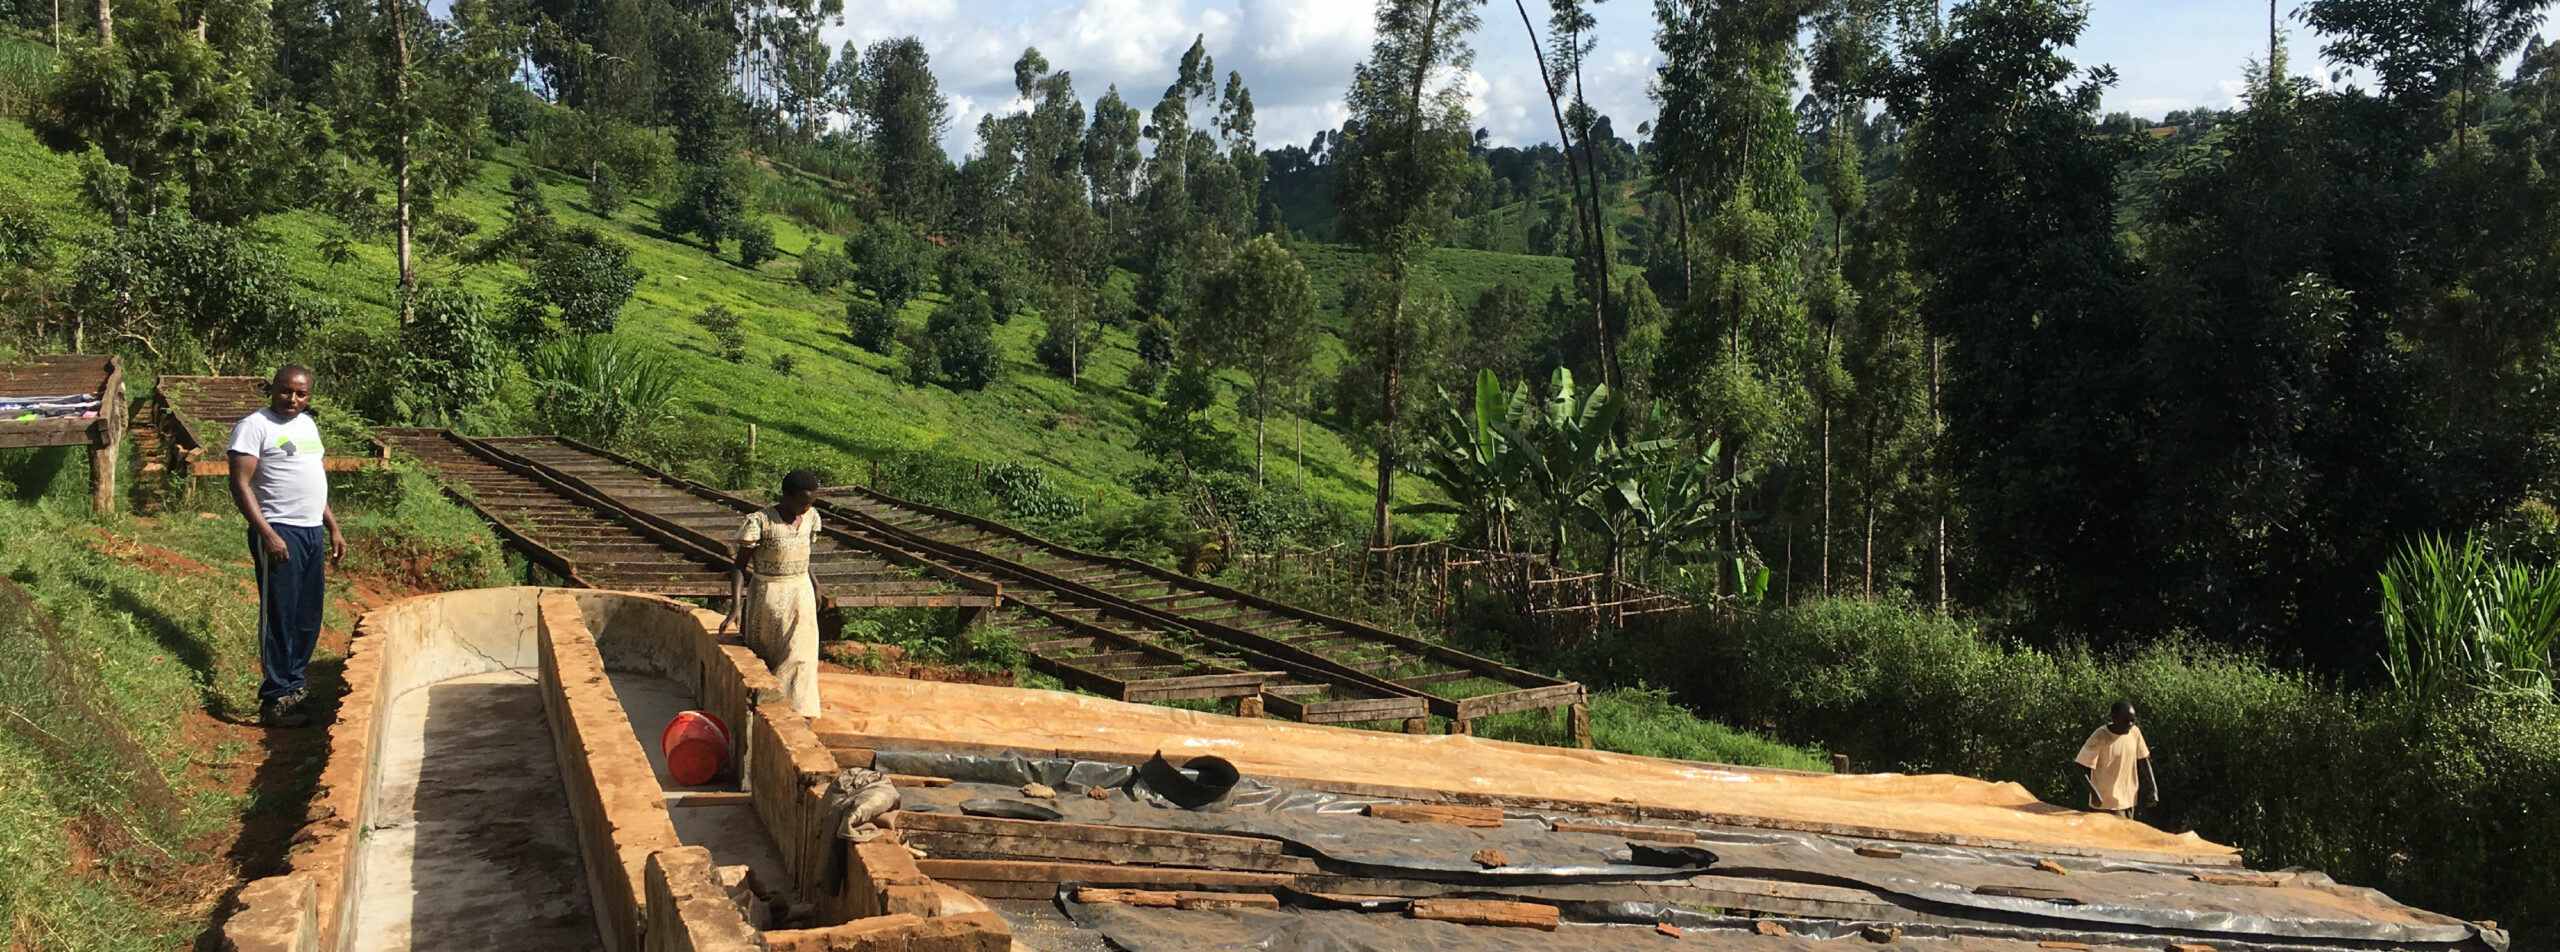 Geschenkte Farm im Kaffee-Ursprung Kenia